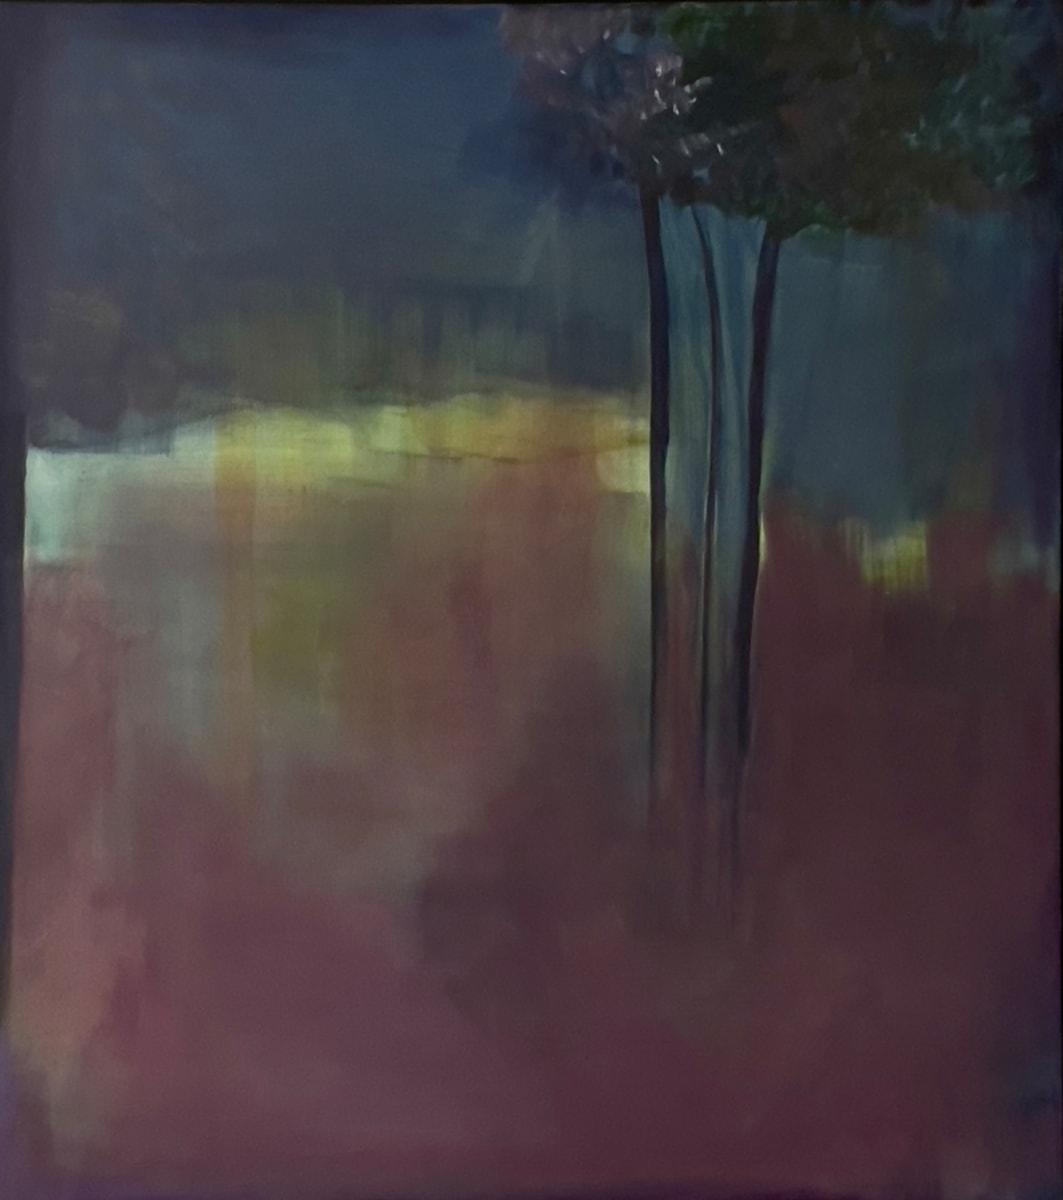 Morning Fog by Marjorie Windrem  Image: Morning Fog
Oil on Stretched Canvas
